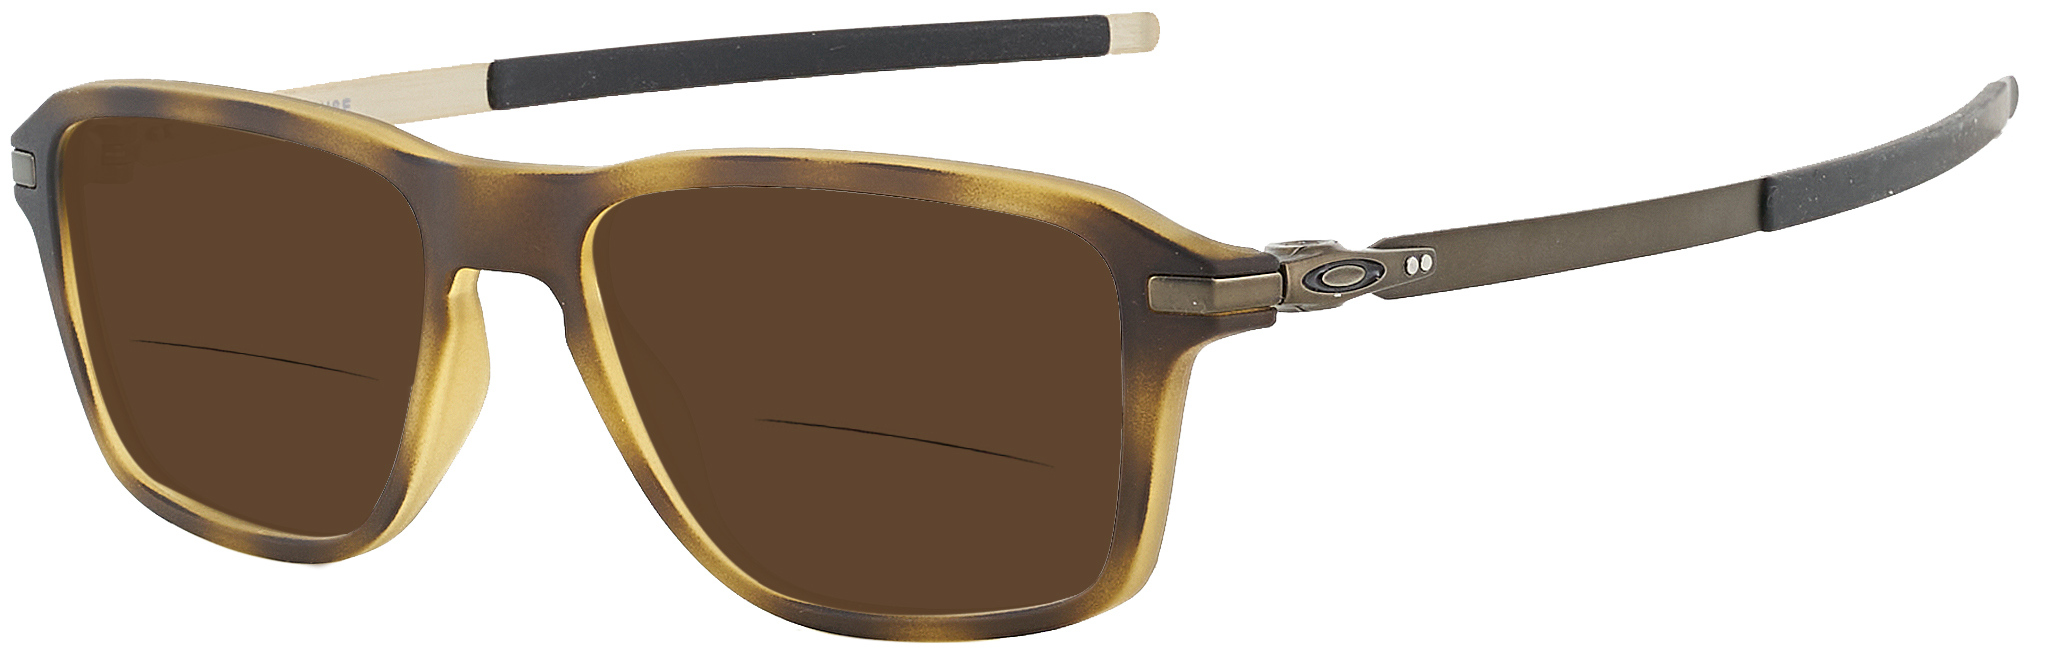 bifocal sunglasses oakley